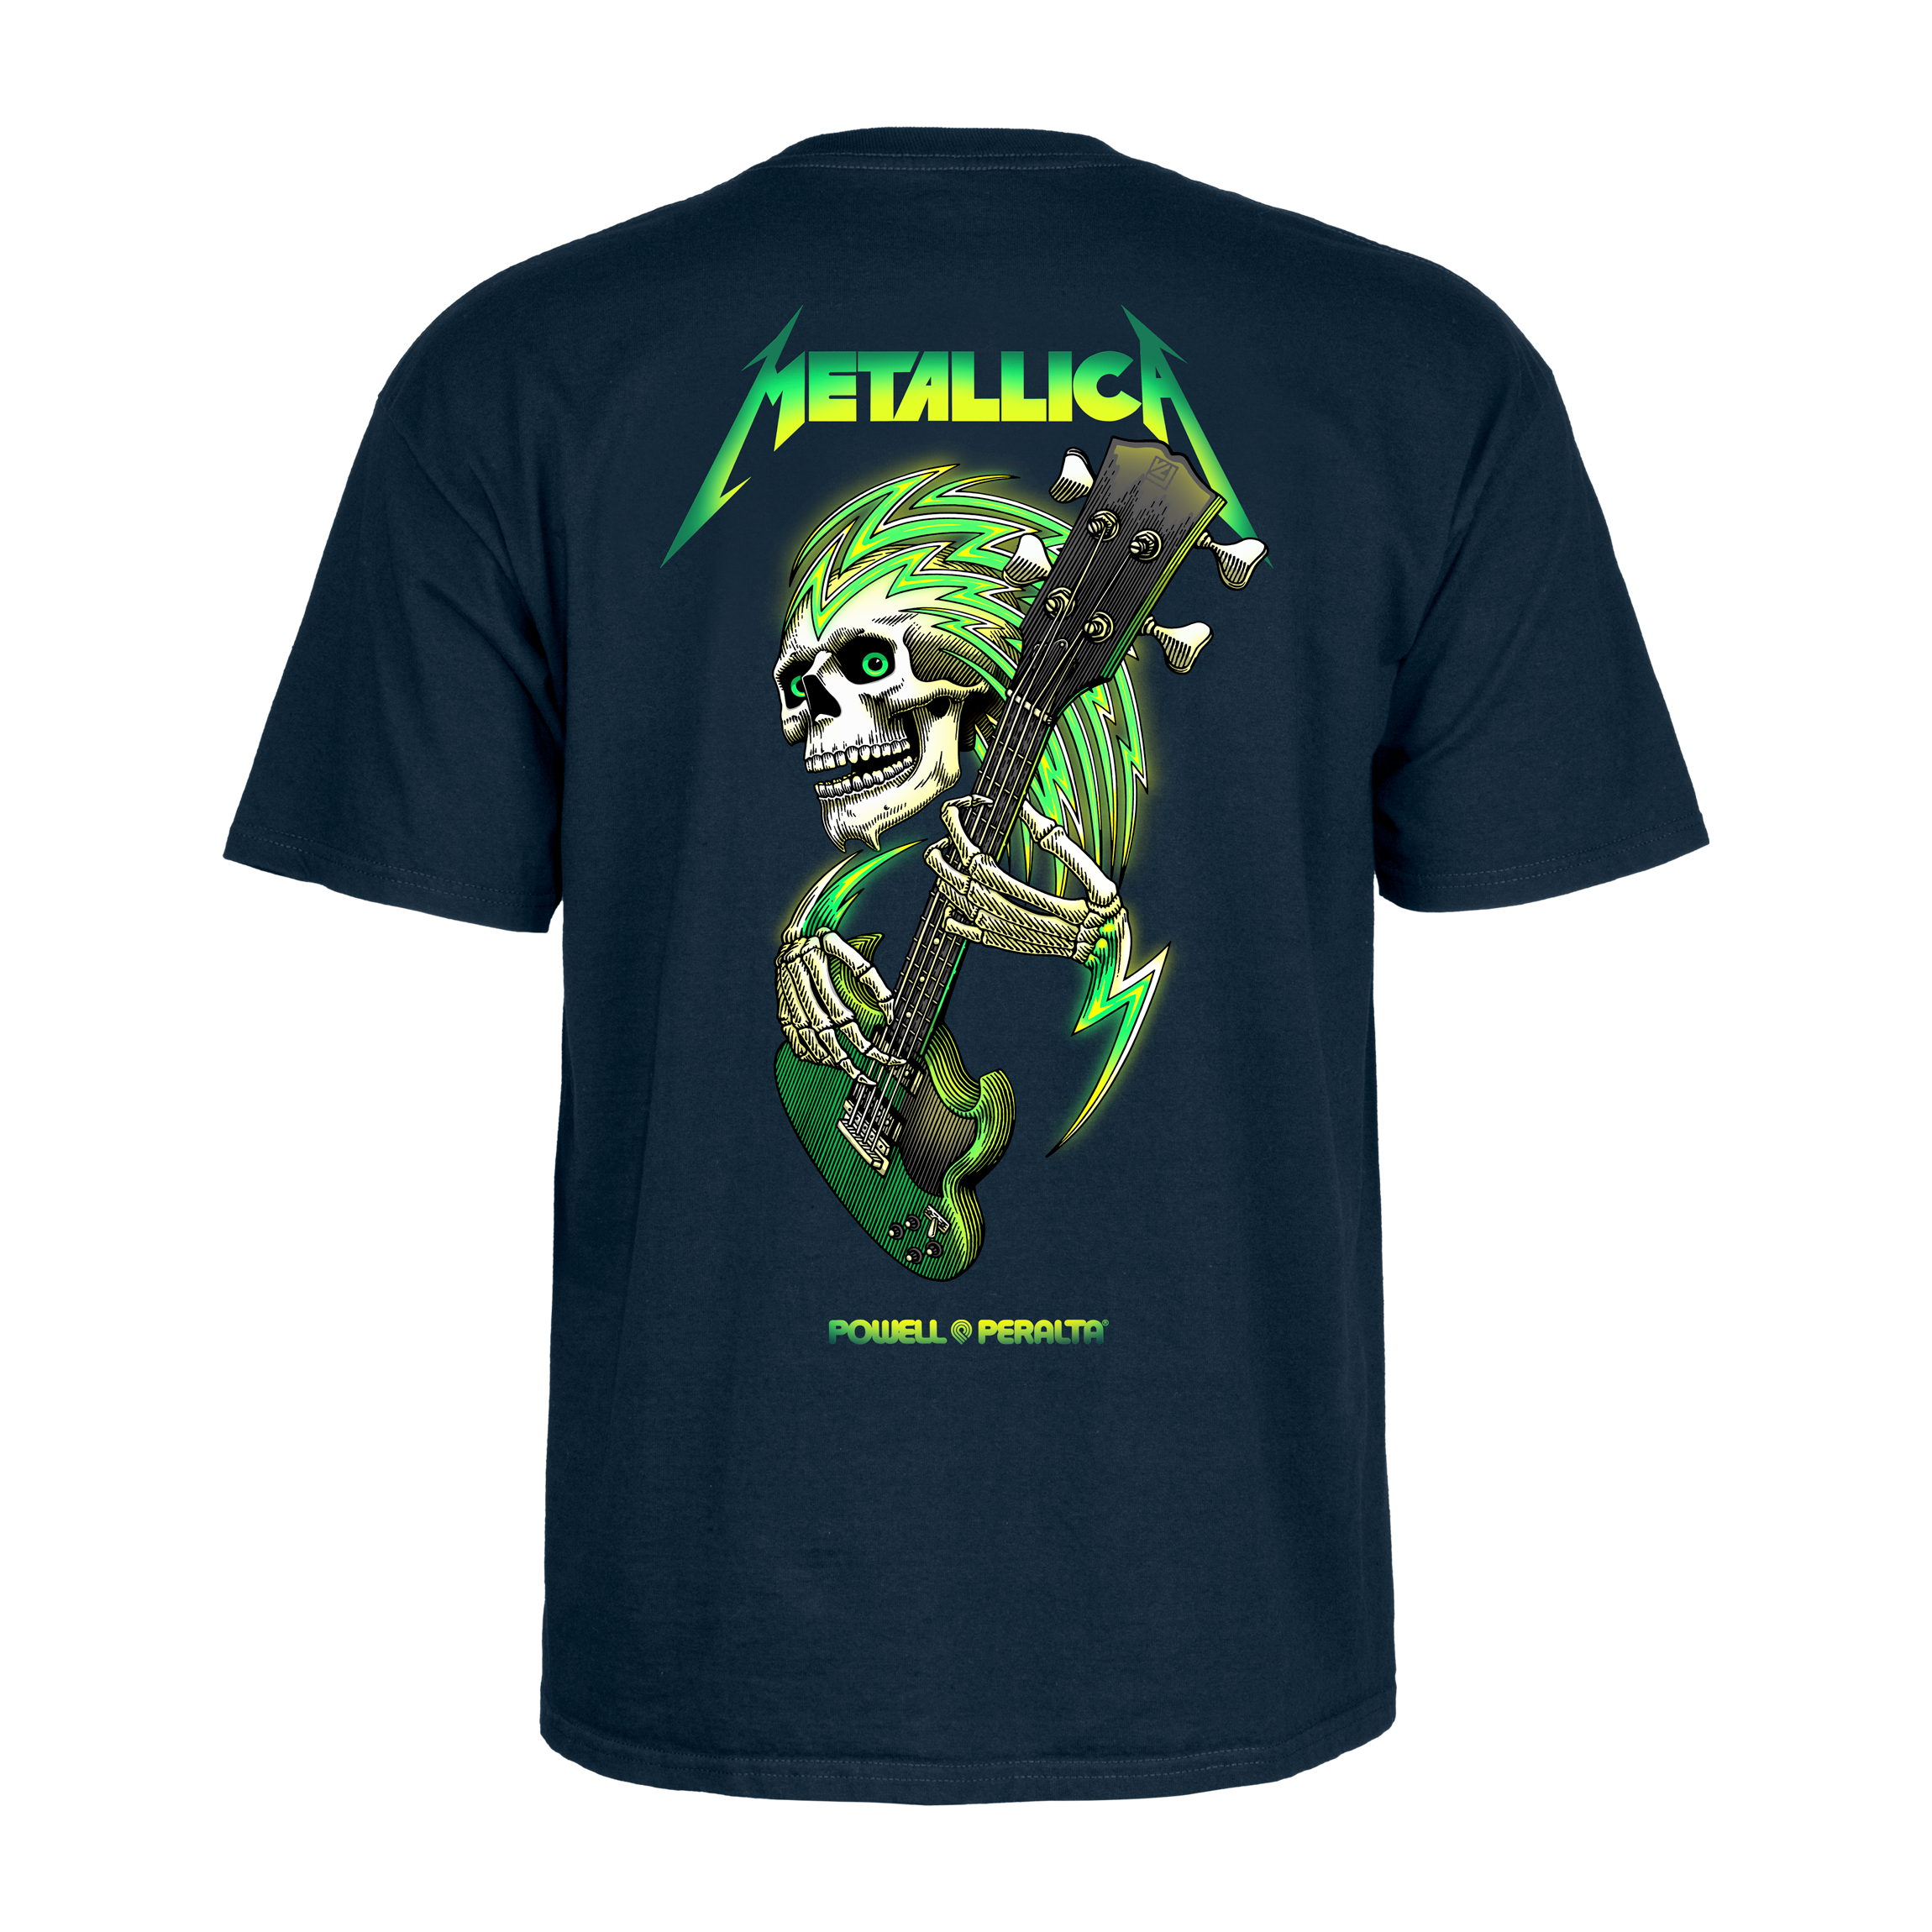 Peralta Metallica (Navy) | Metallica.com